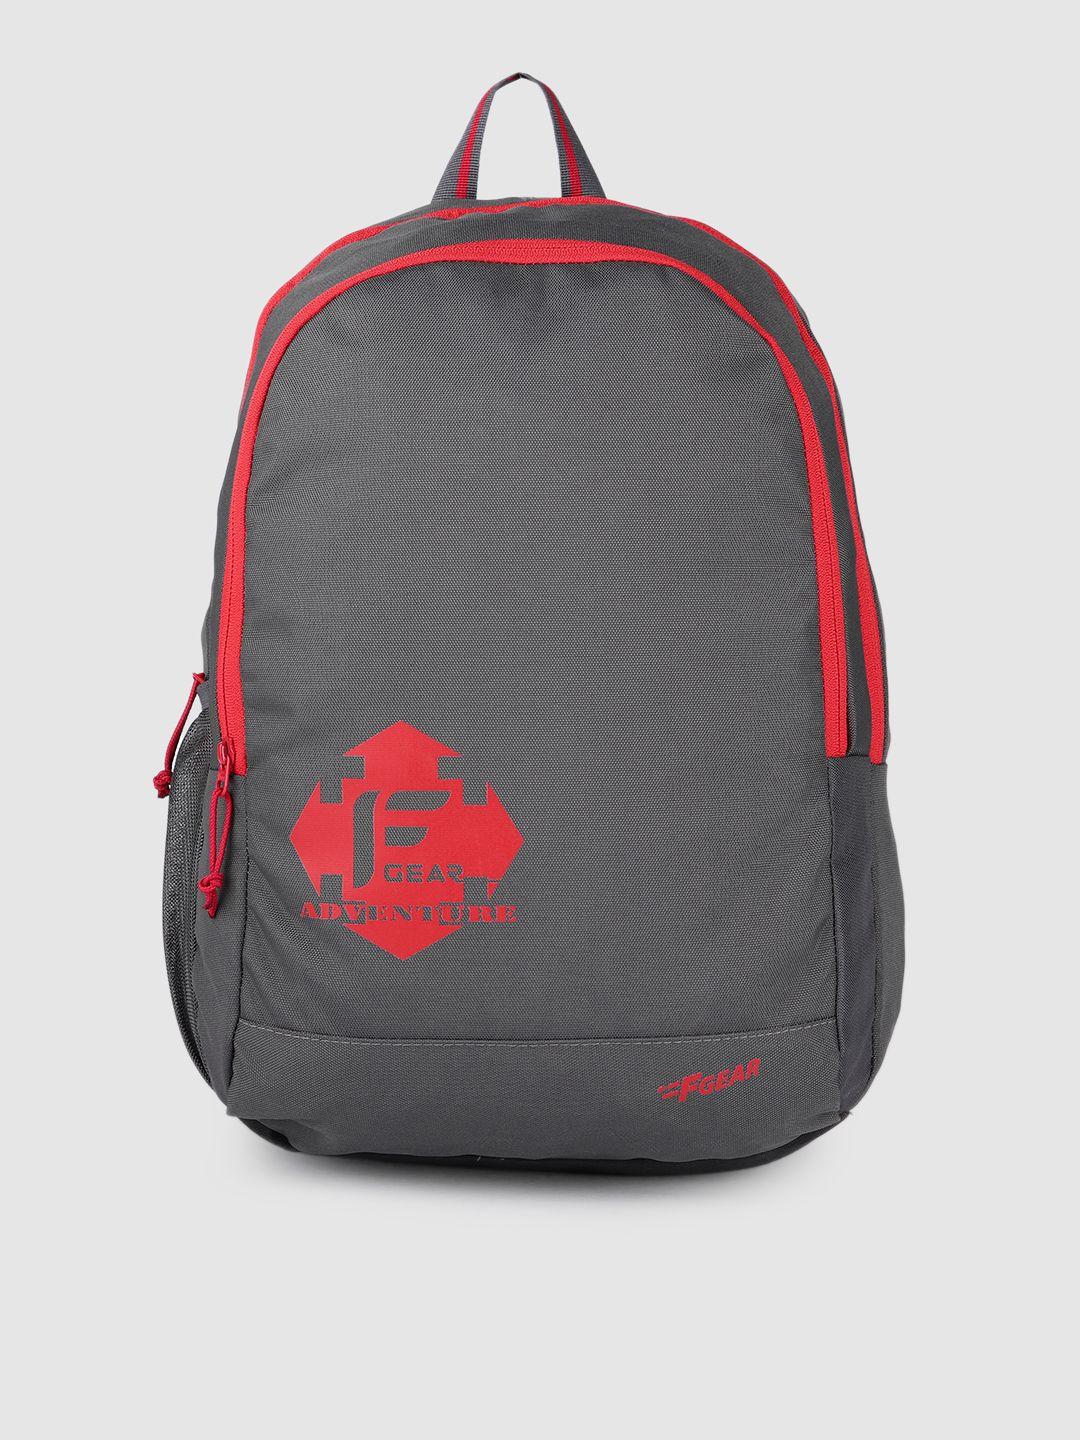 f gear unisex grey & red brand logo laptop backpack